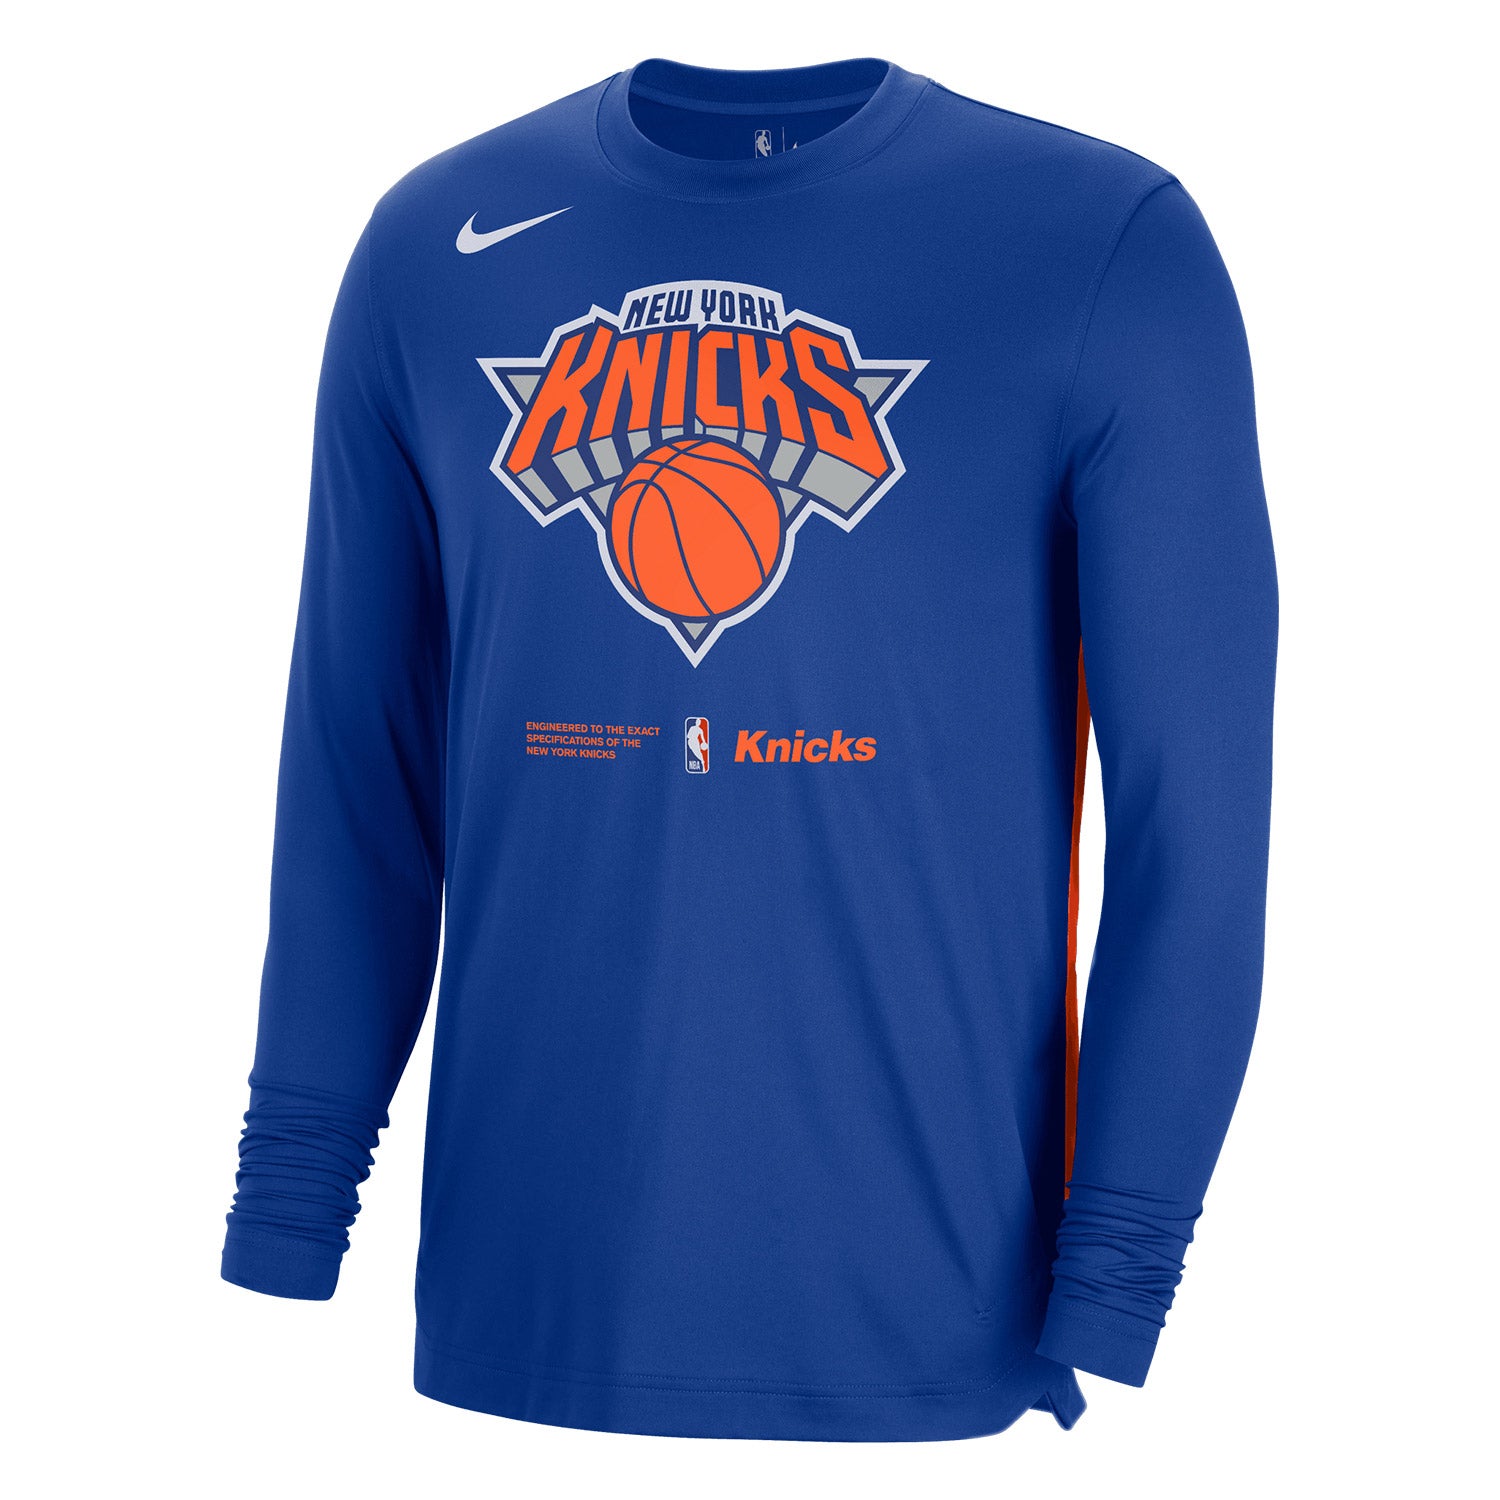 Lids RJ Barrett New York Knicks Fanatics Authentic Autographed Nike Royal  Blue Swingman Jersey